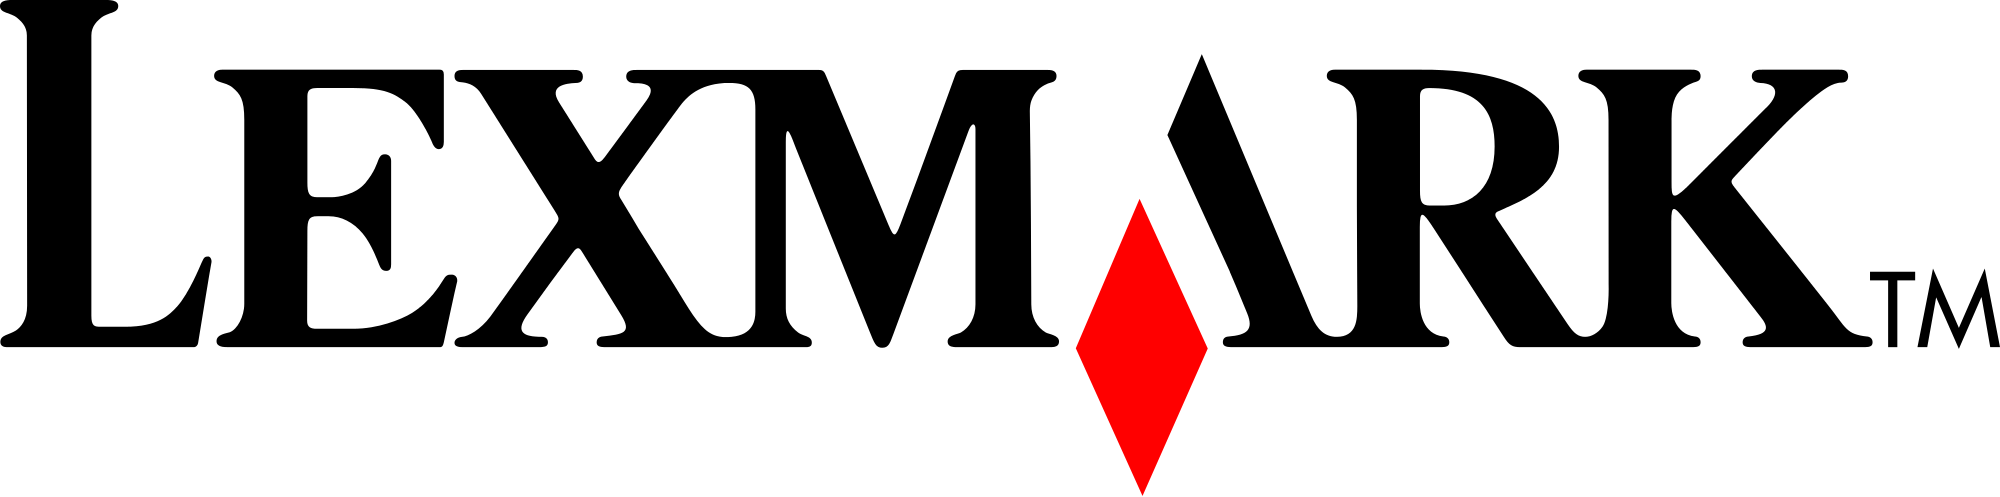 Lexmark Logo examples - Lexma